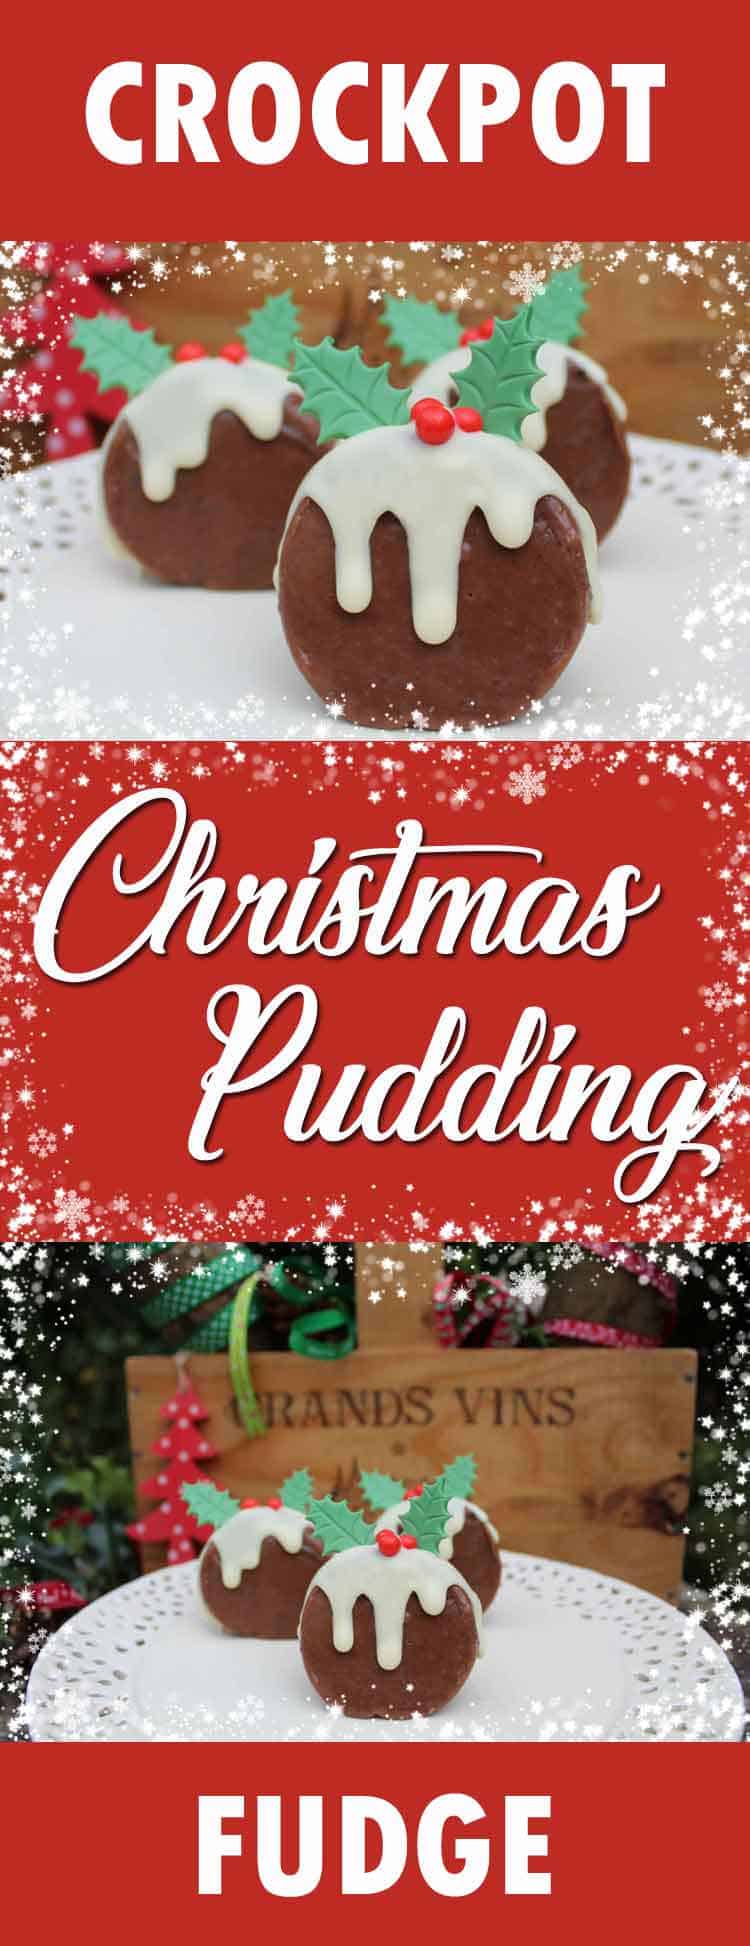 Christmas Pudding Slow cooker fudge